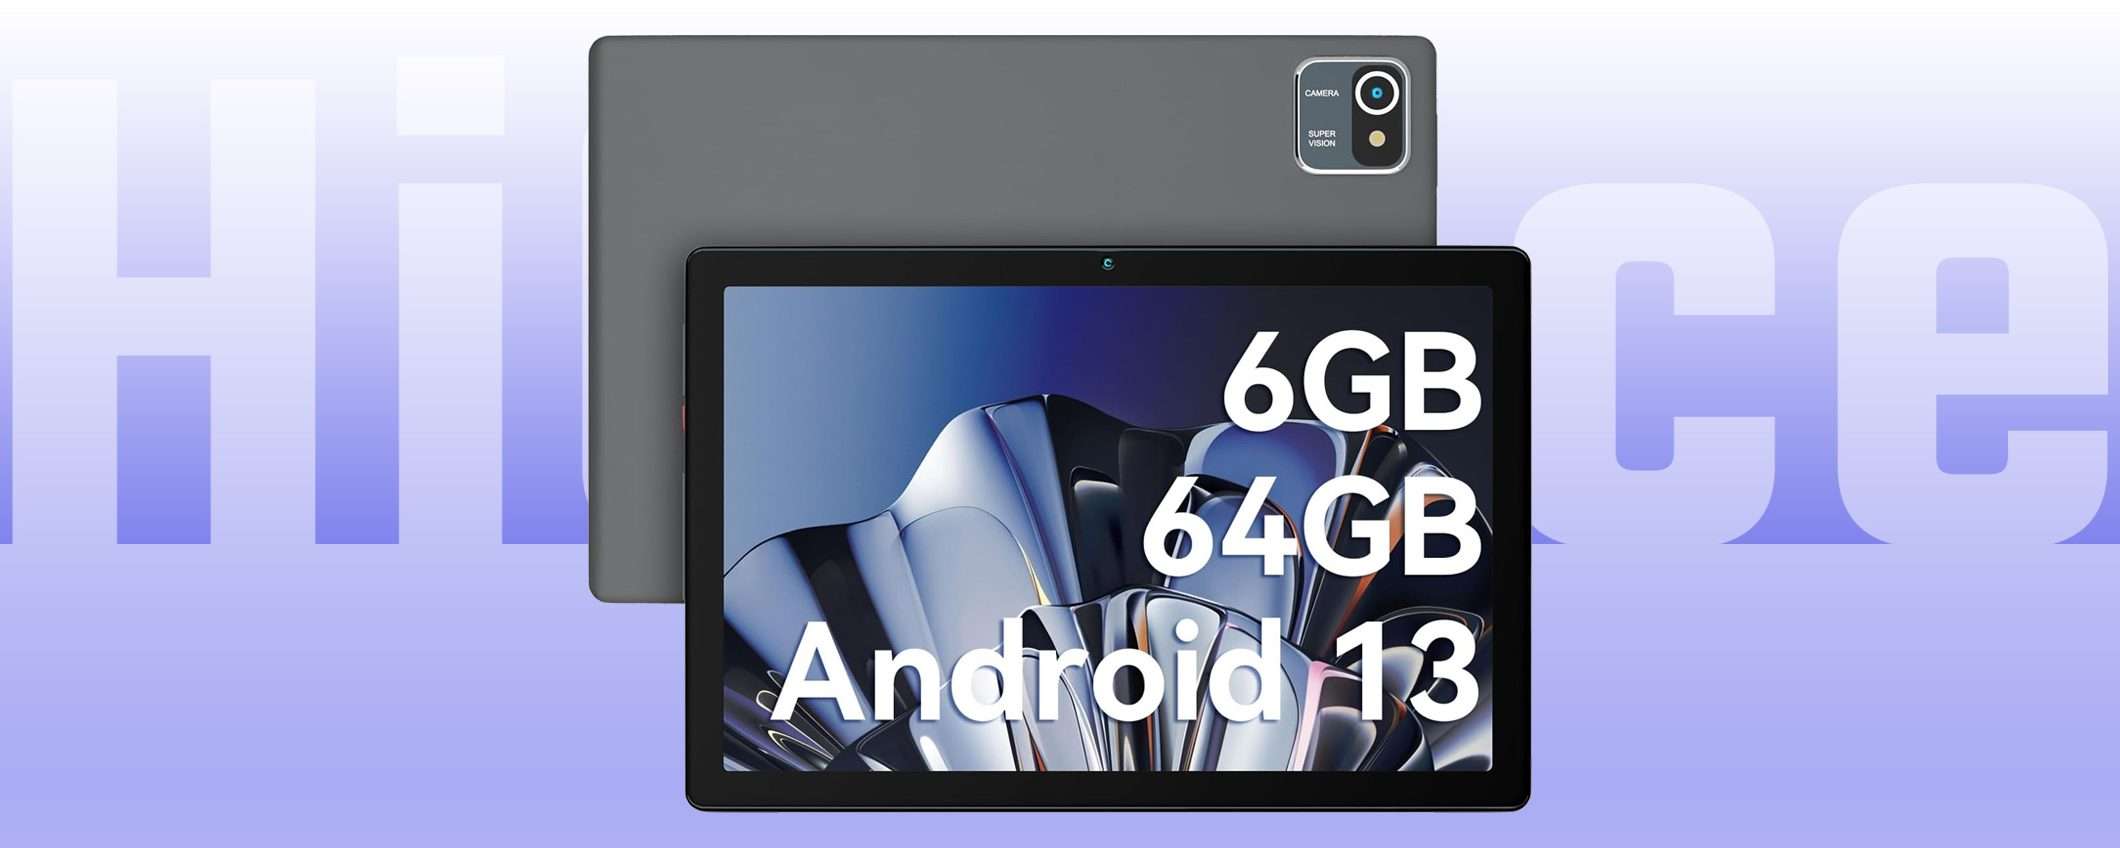 Tablet Android a 60€: regalo di Natale hi-tech e low cost